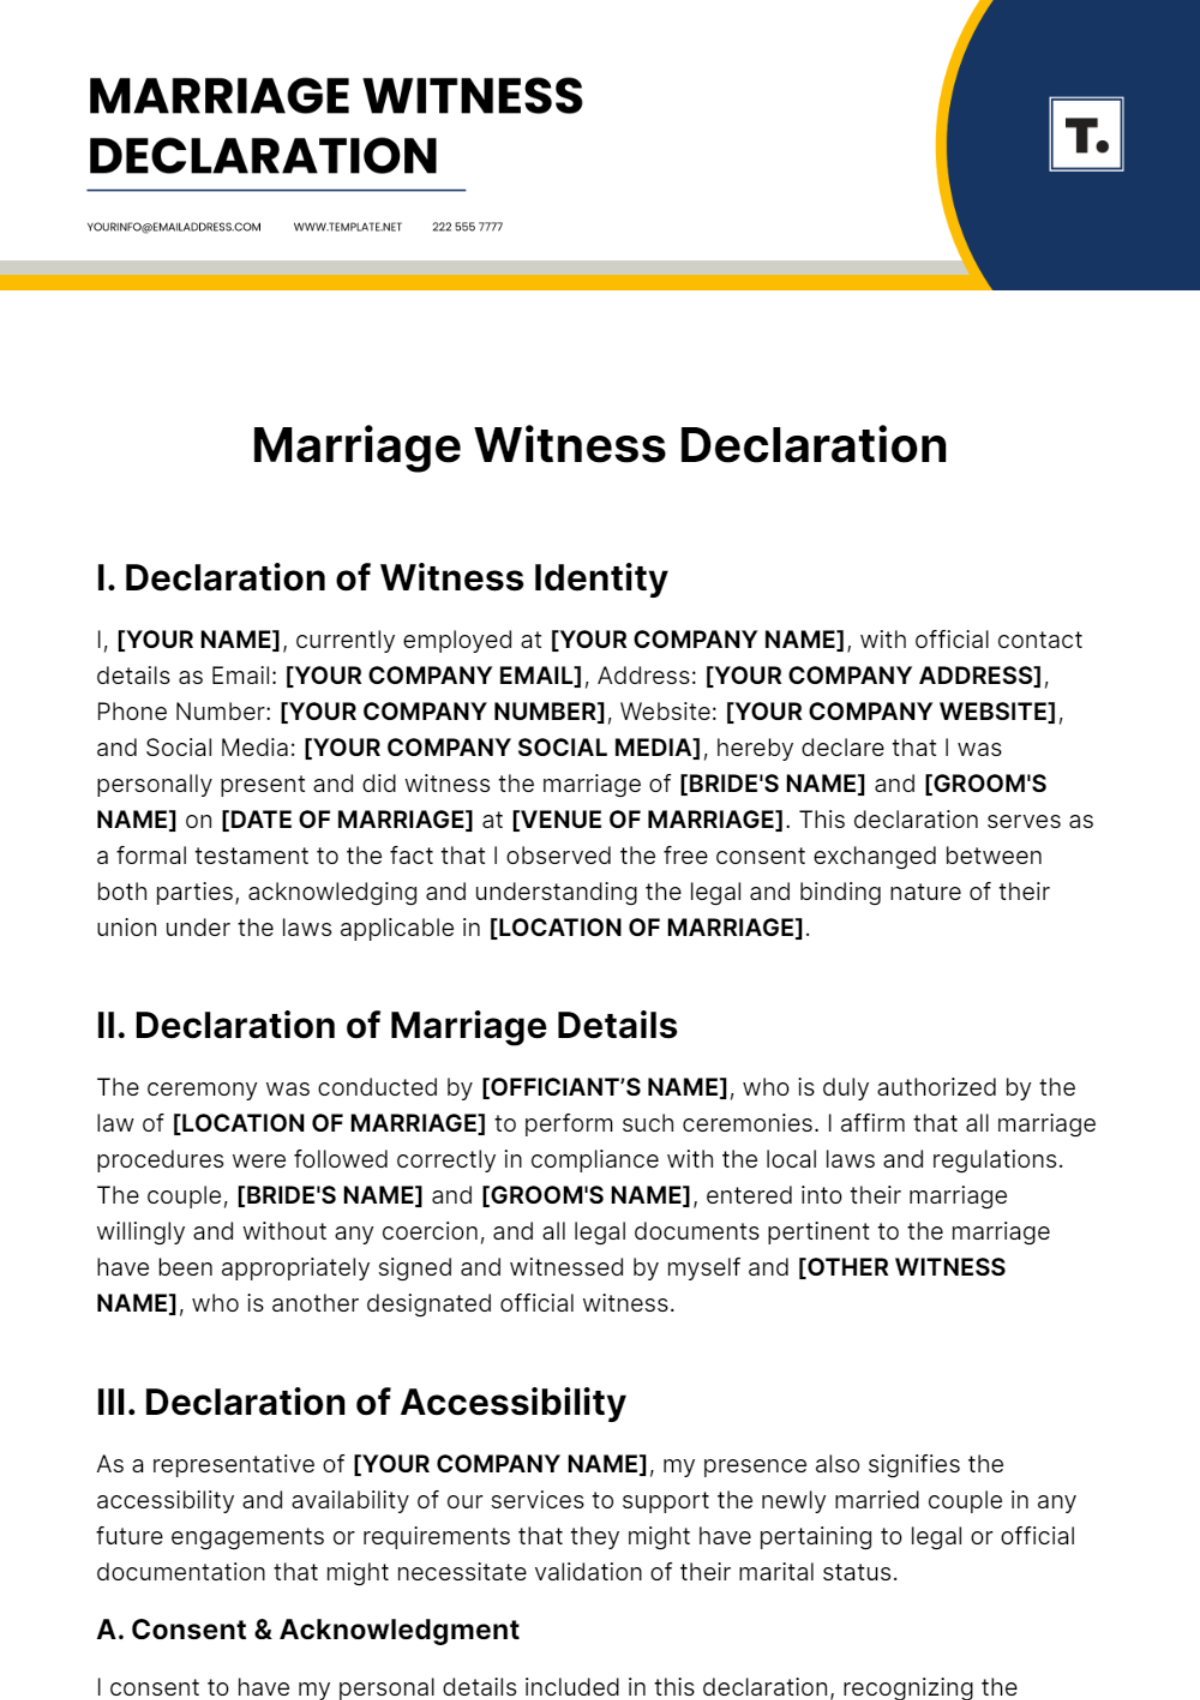 Marriage Witness Declaration Template